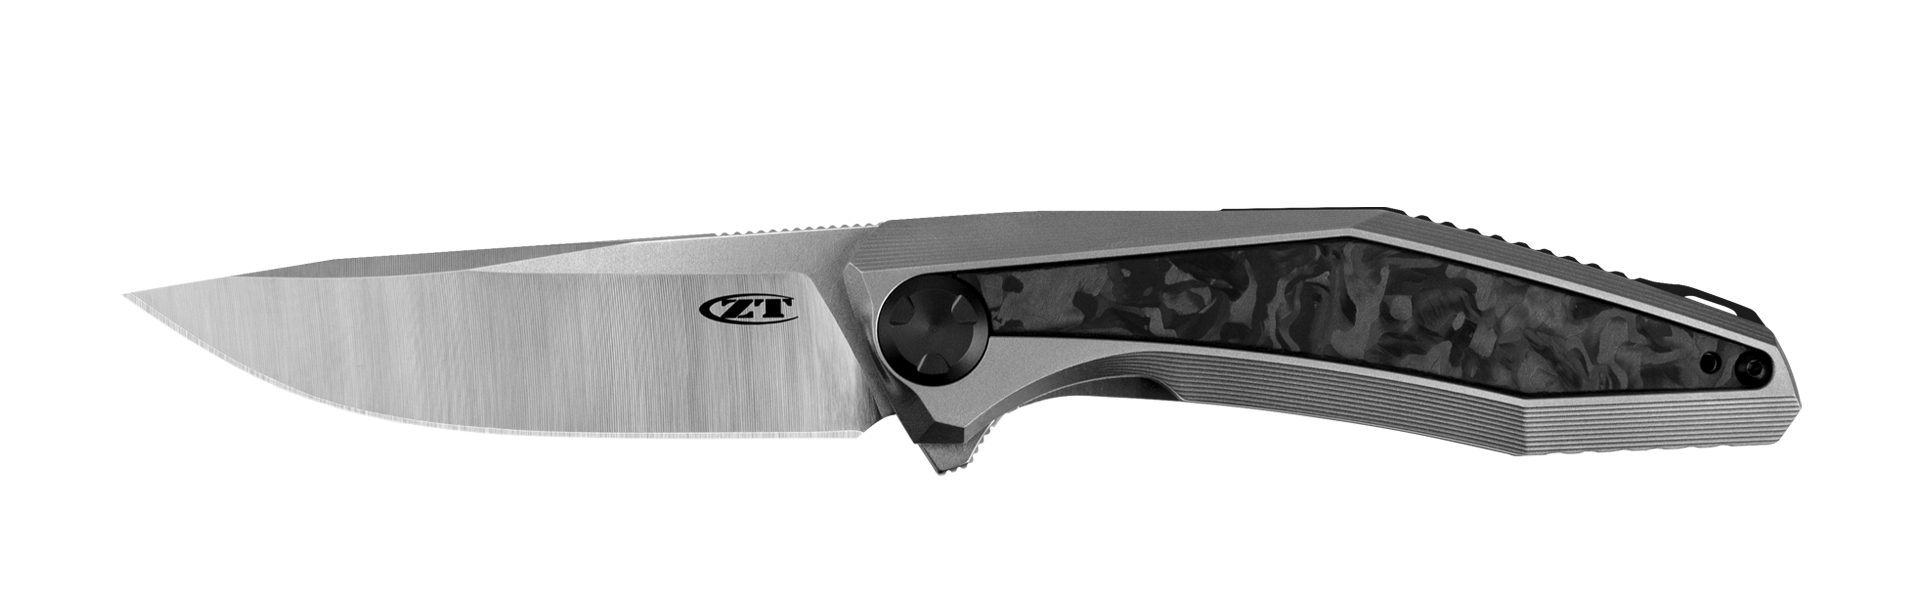 ZT 0470 Sinkevich Folding Knife – 20CV Steel, Titanium Handle with Carbon Fiber